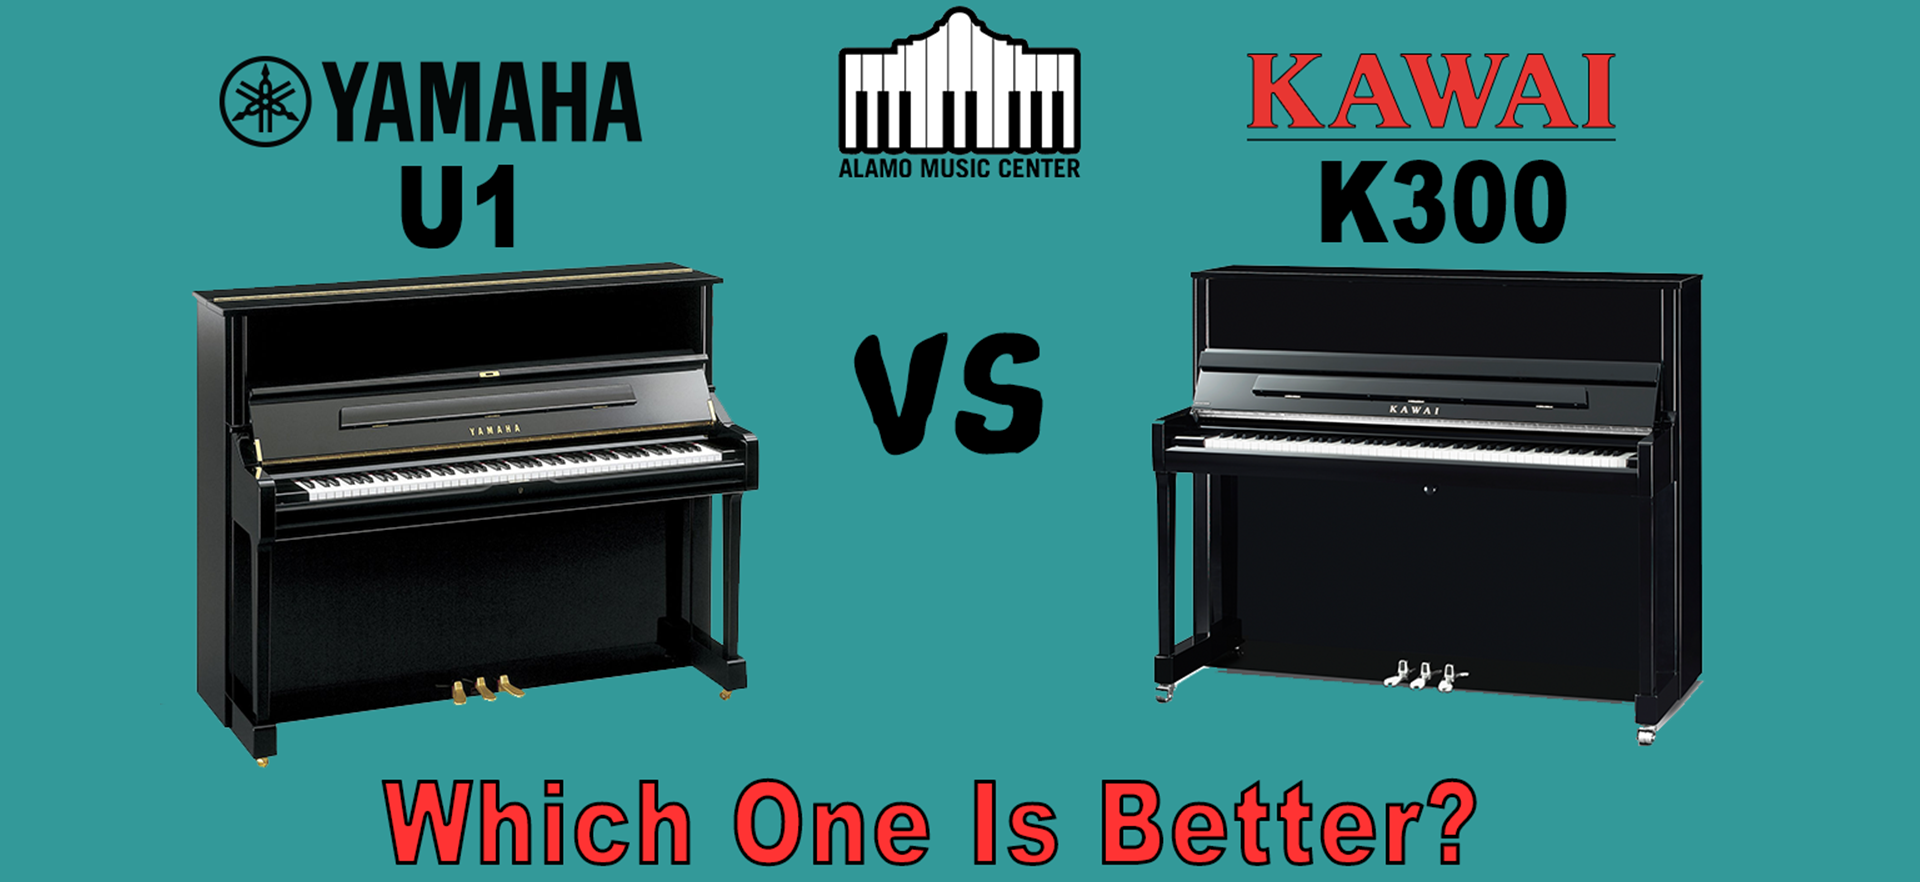 Yamaha u1 vs kawai k300